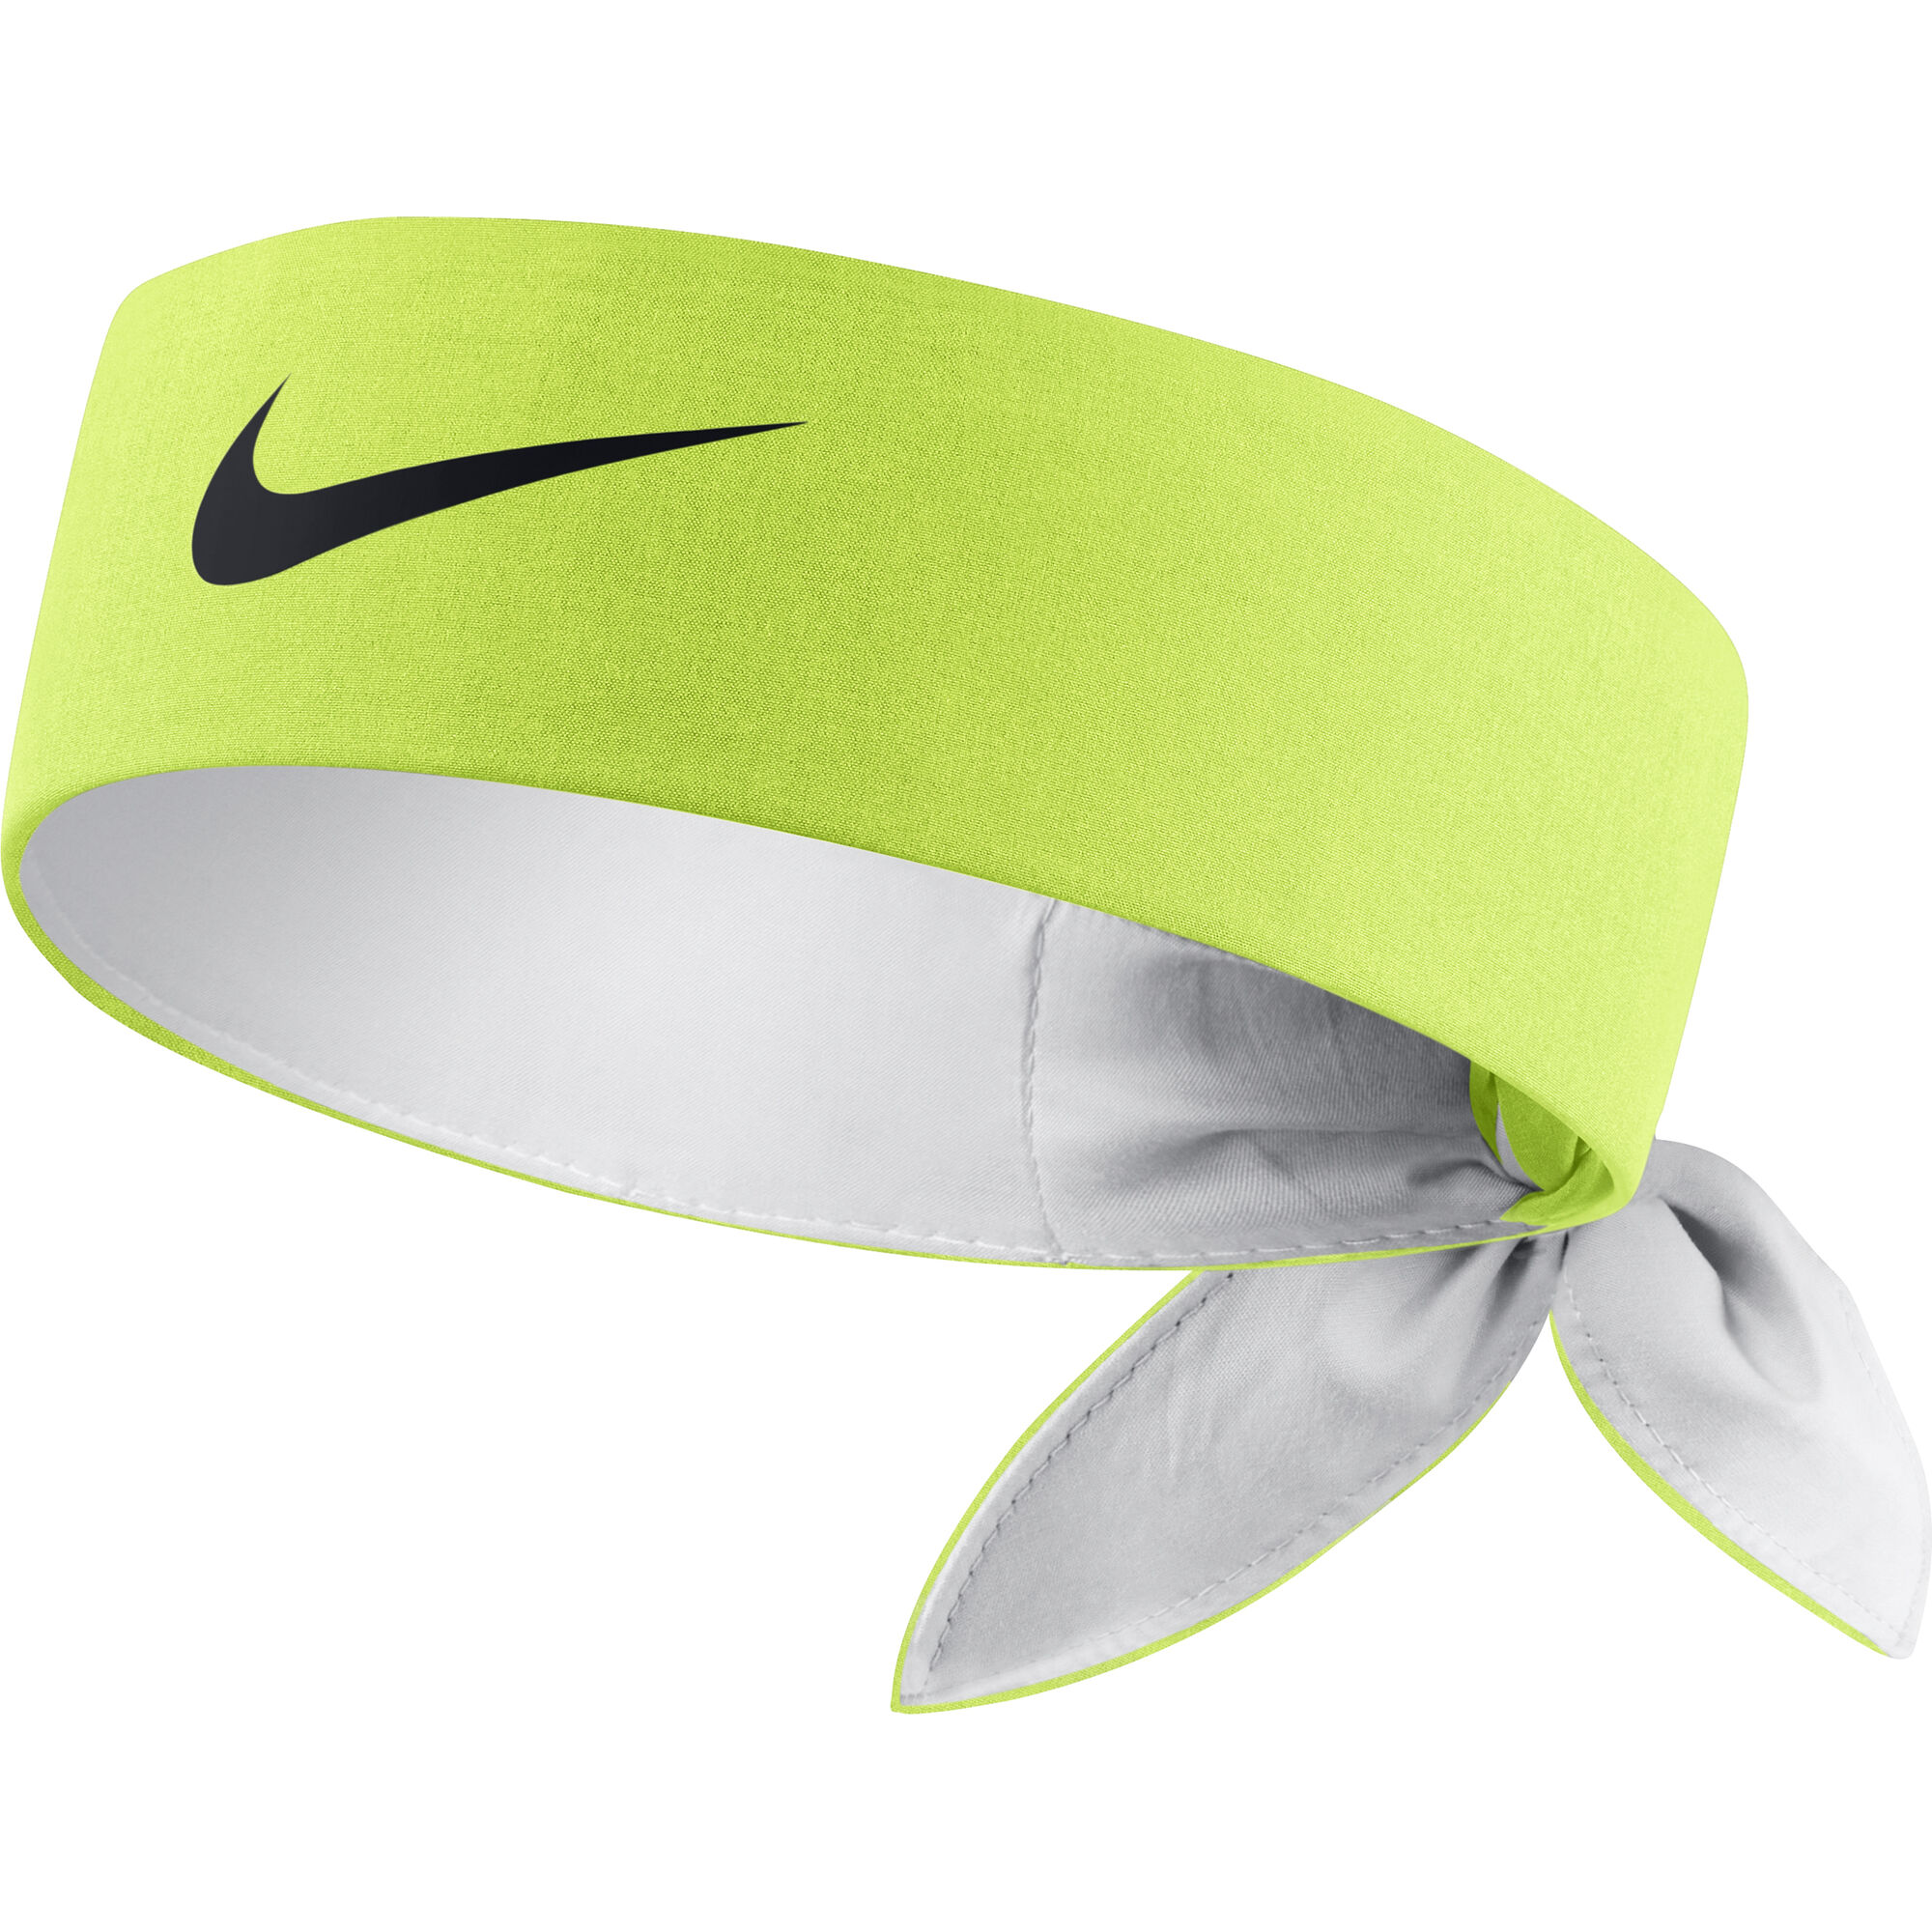 Nike Rafael Nadal Stirnband Herren - Neongelb online kaufen | Tennis-Peters